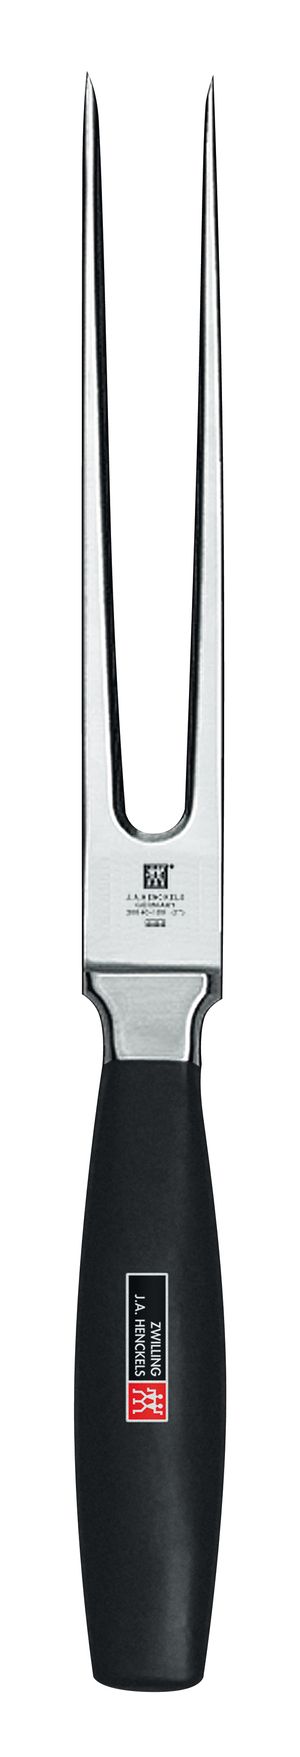 FOUR STAR Carving Fork - 18cm